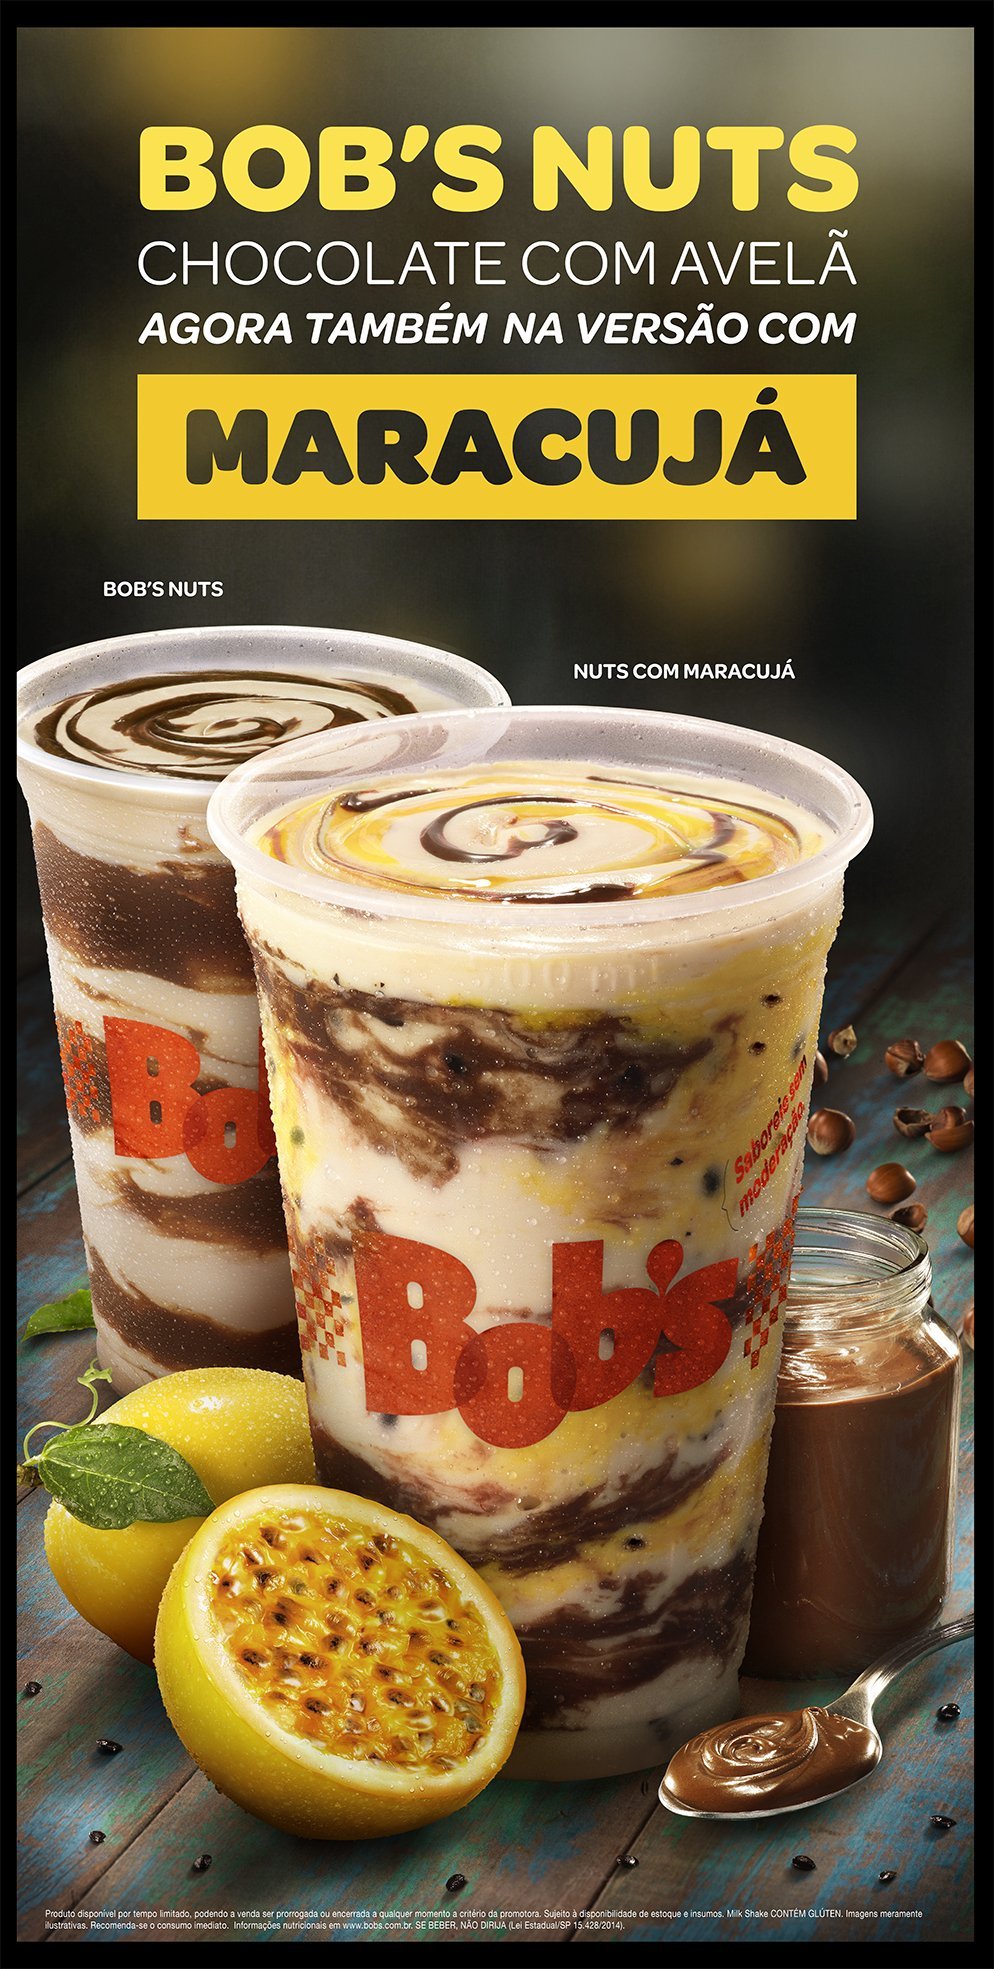 Novo milk shake do Bob's: Nuts com maracujá